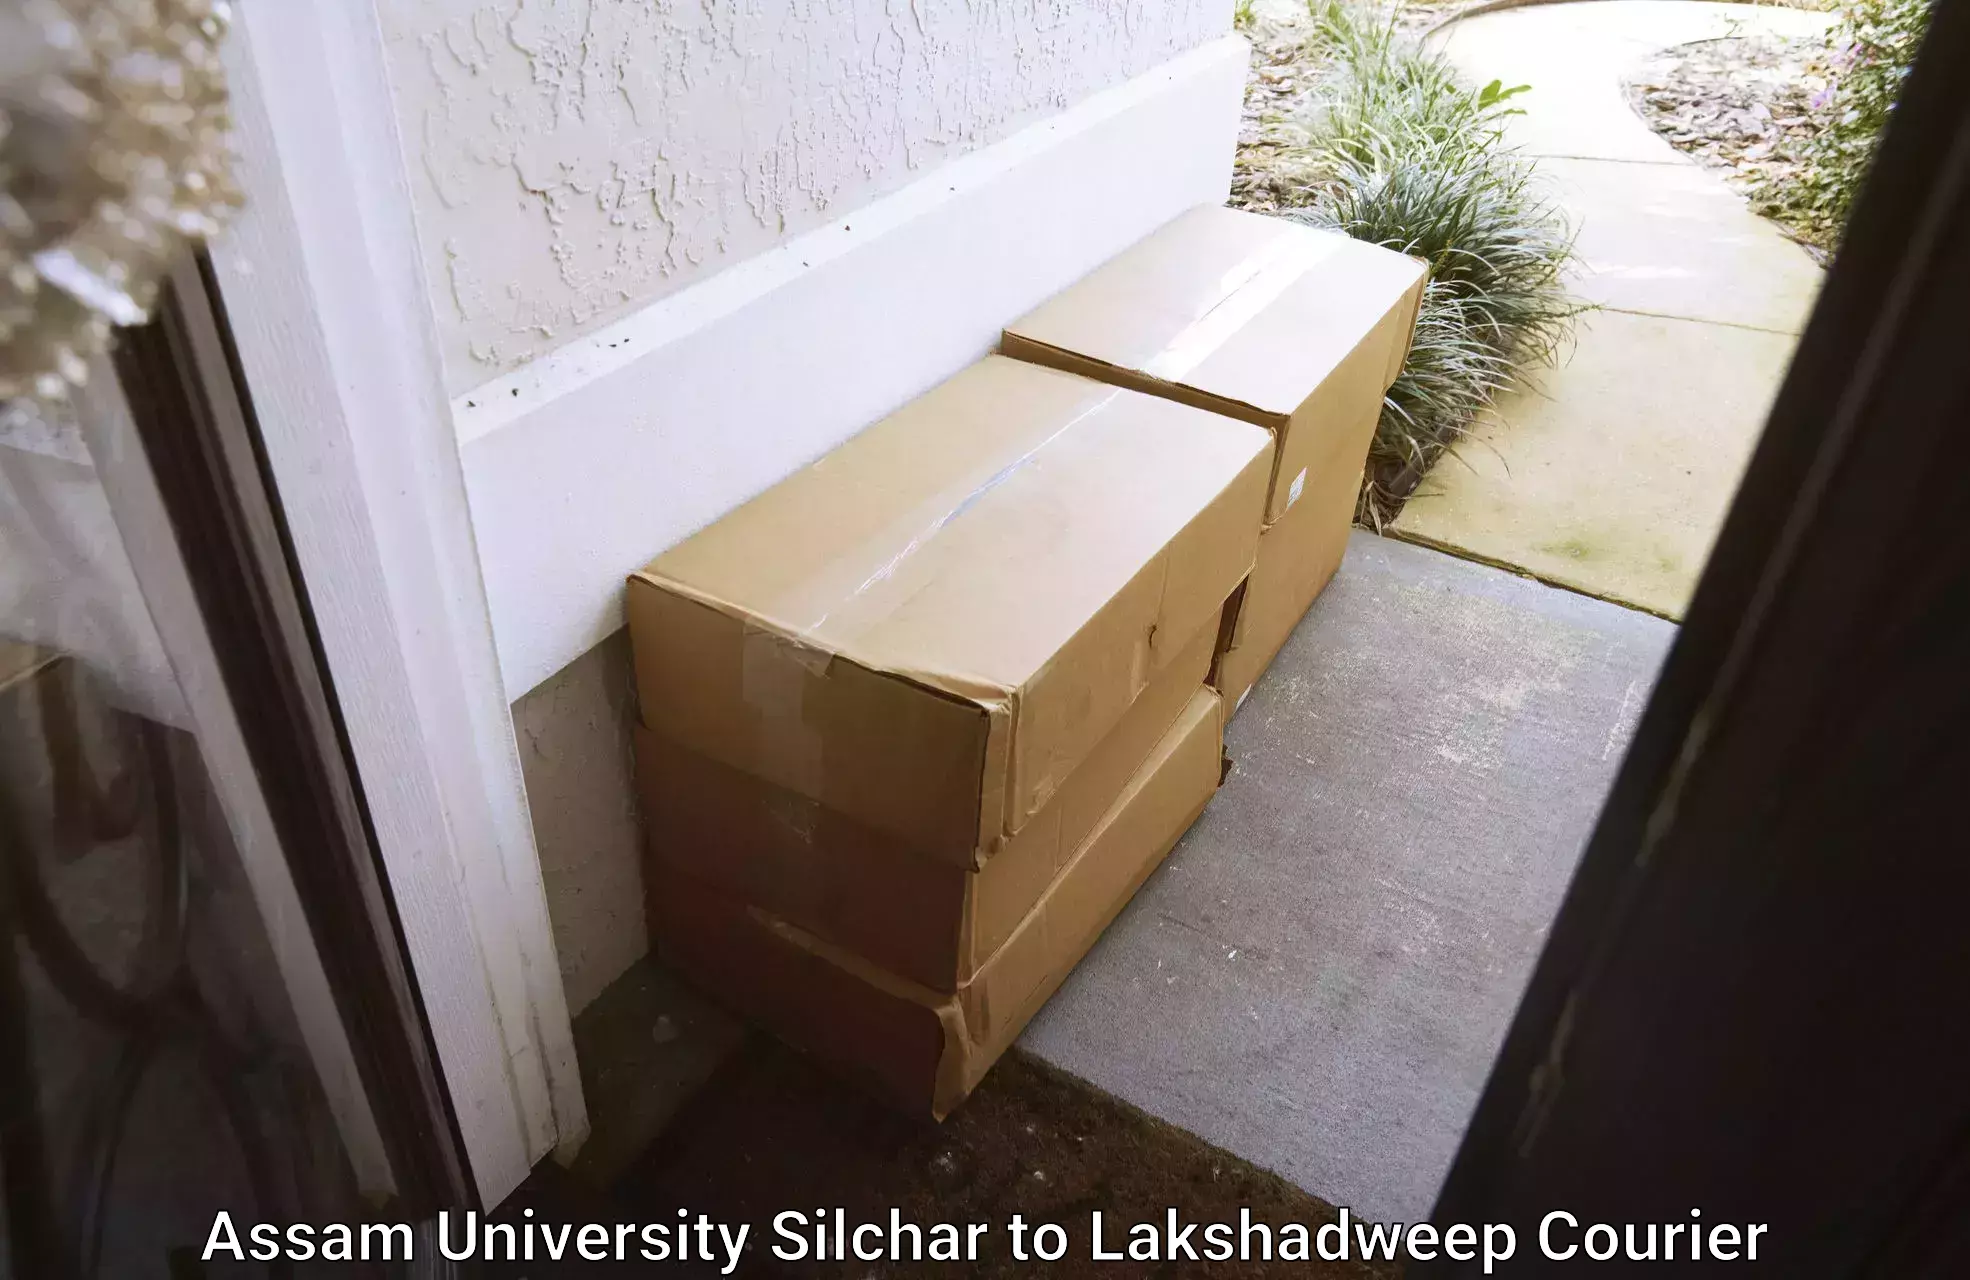 Courier service partnerships Assam University Silchar to Lakshadweep